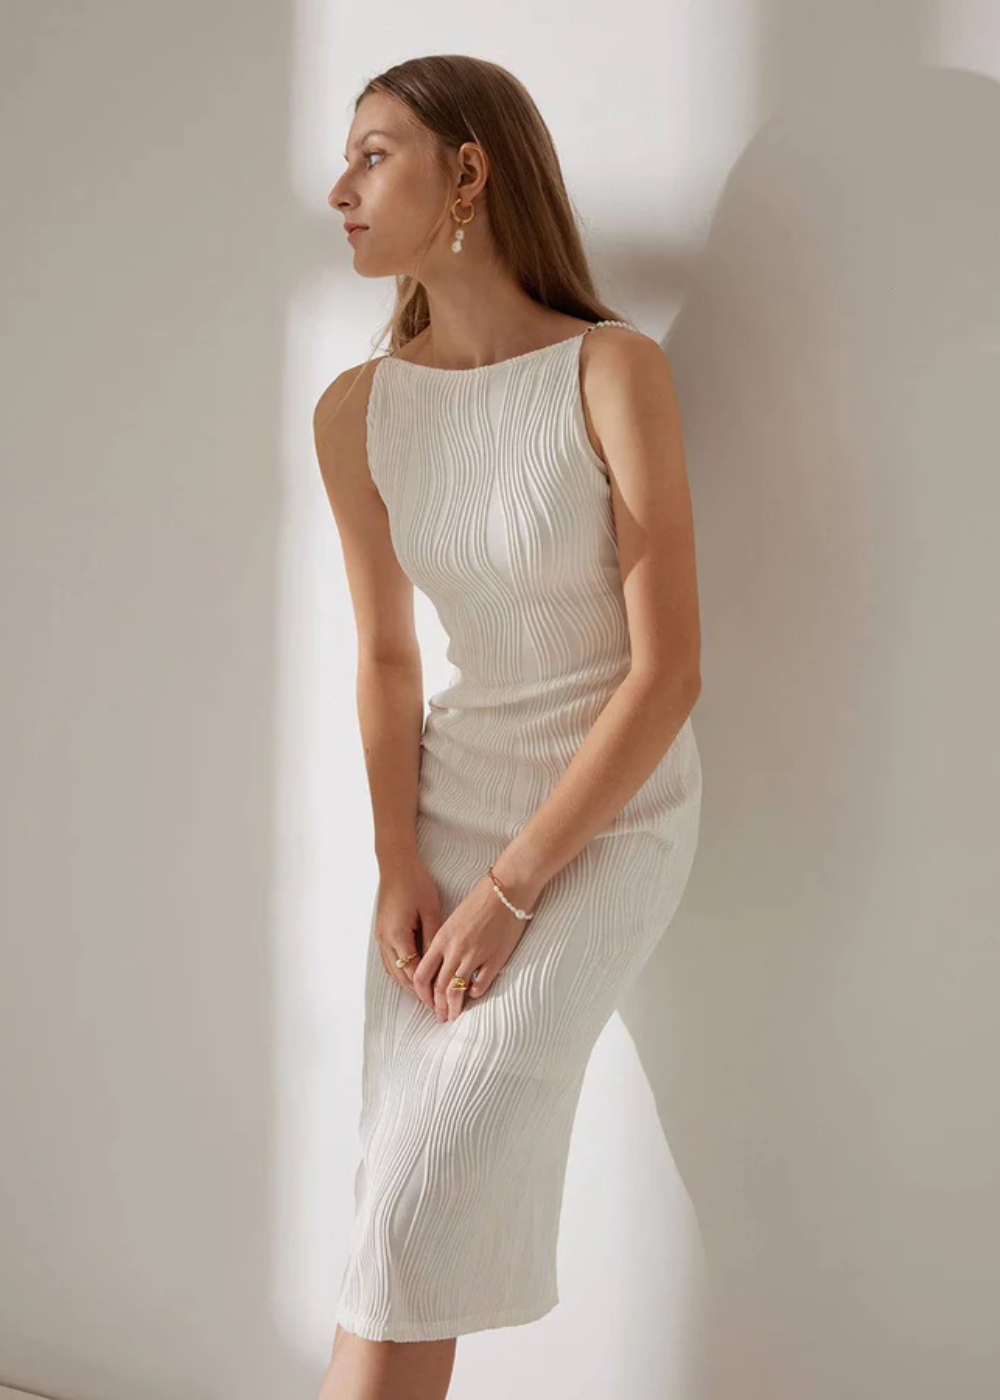 The Water Ripple Textured Cami Dress - vestido curto texturizado branco - vestidos de noiva - outono - foto de mulher inclinada para frente com vestido branco - https://stealthelook.com.br